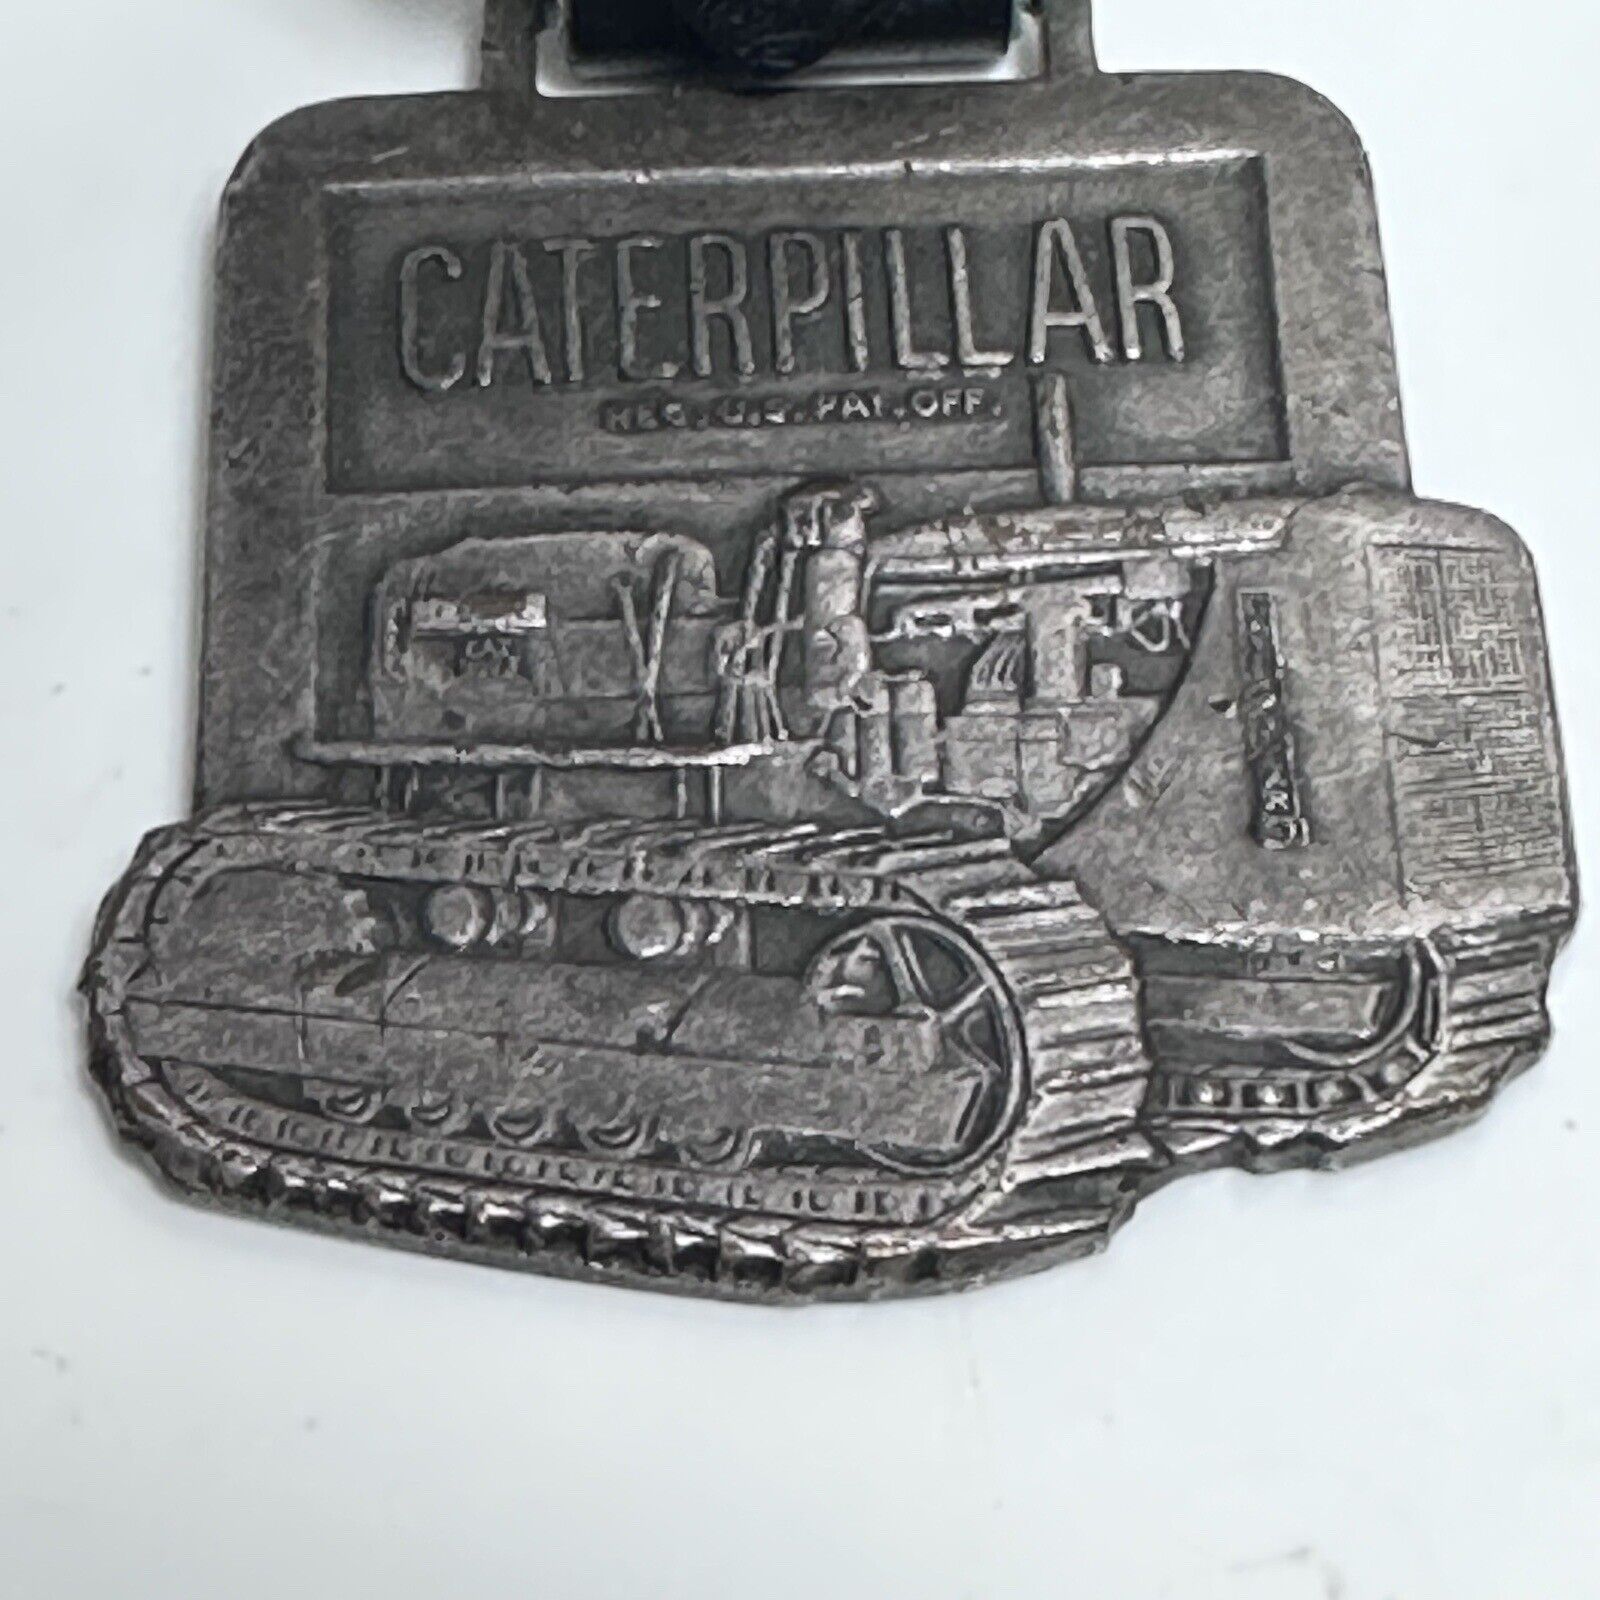 Caterpillar CAT Medallion Watch Fob Perkins / Milton Co Boston & Springfield B8